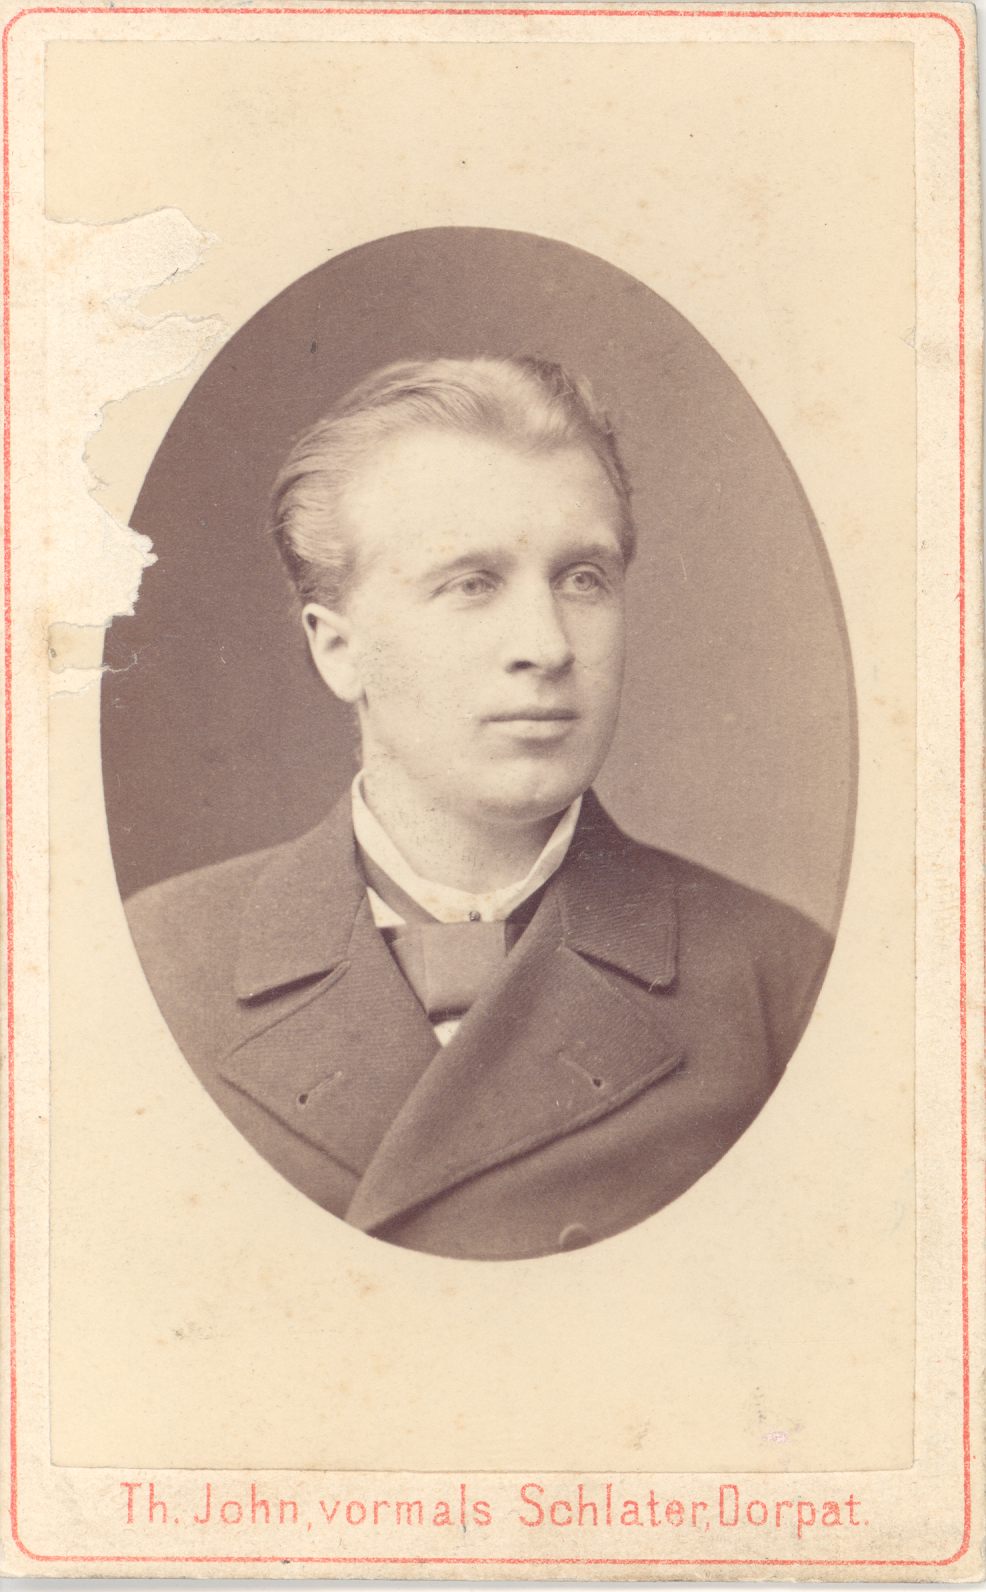 Eisen, M.J.(1857-1934), folklorist.